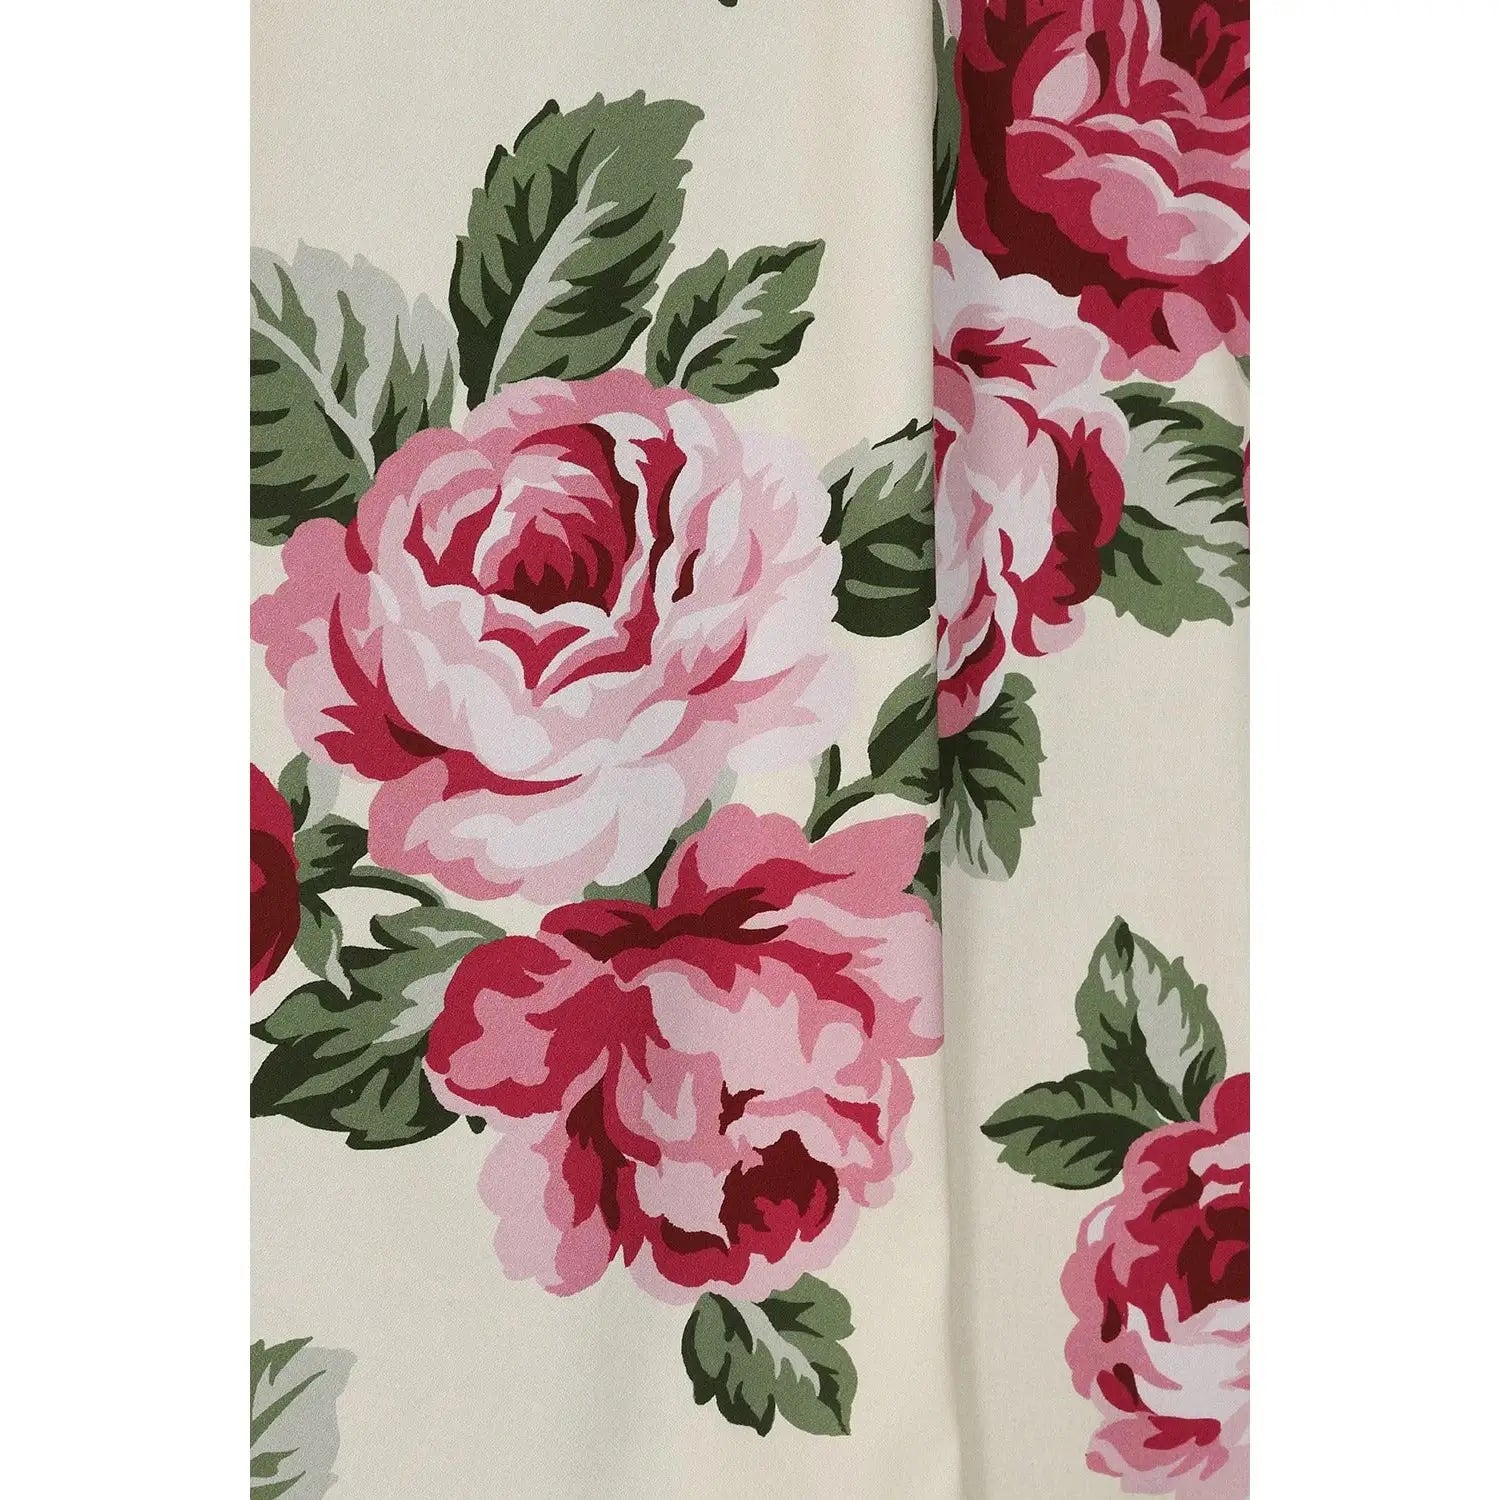 Cream Rose Floral Print Sleeveless Rockabilly 50s Swing Dress